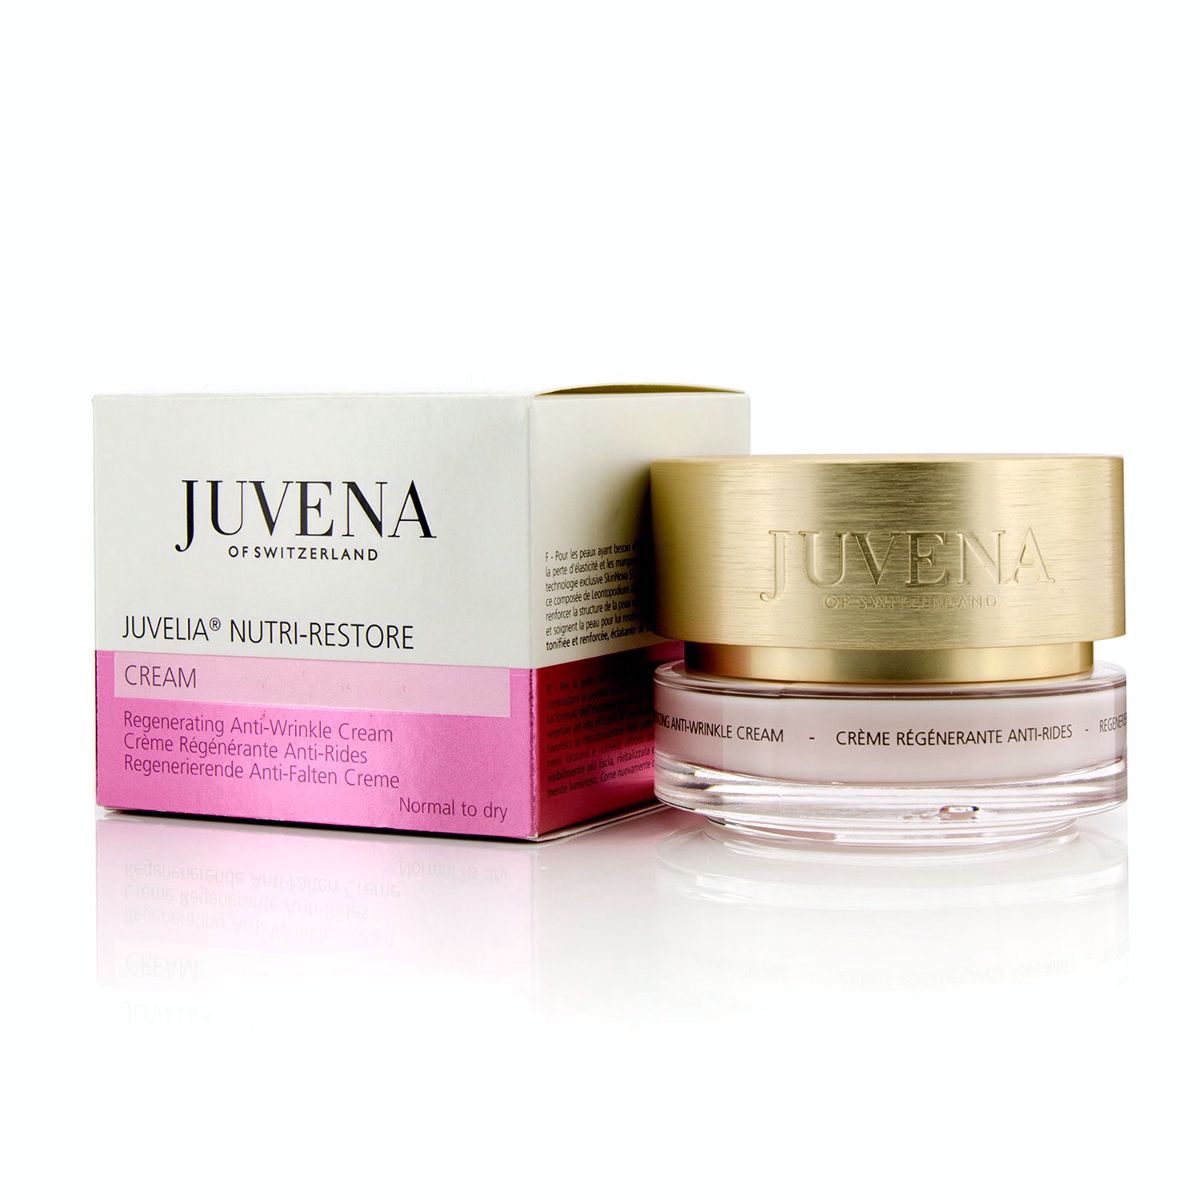 Juvelia Nutri-Restore Regenerating Anti-Wrinkle Cream - Normal To Dry Skin Juvena Image